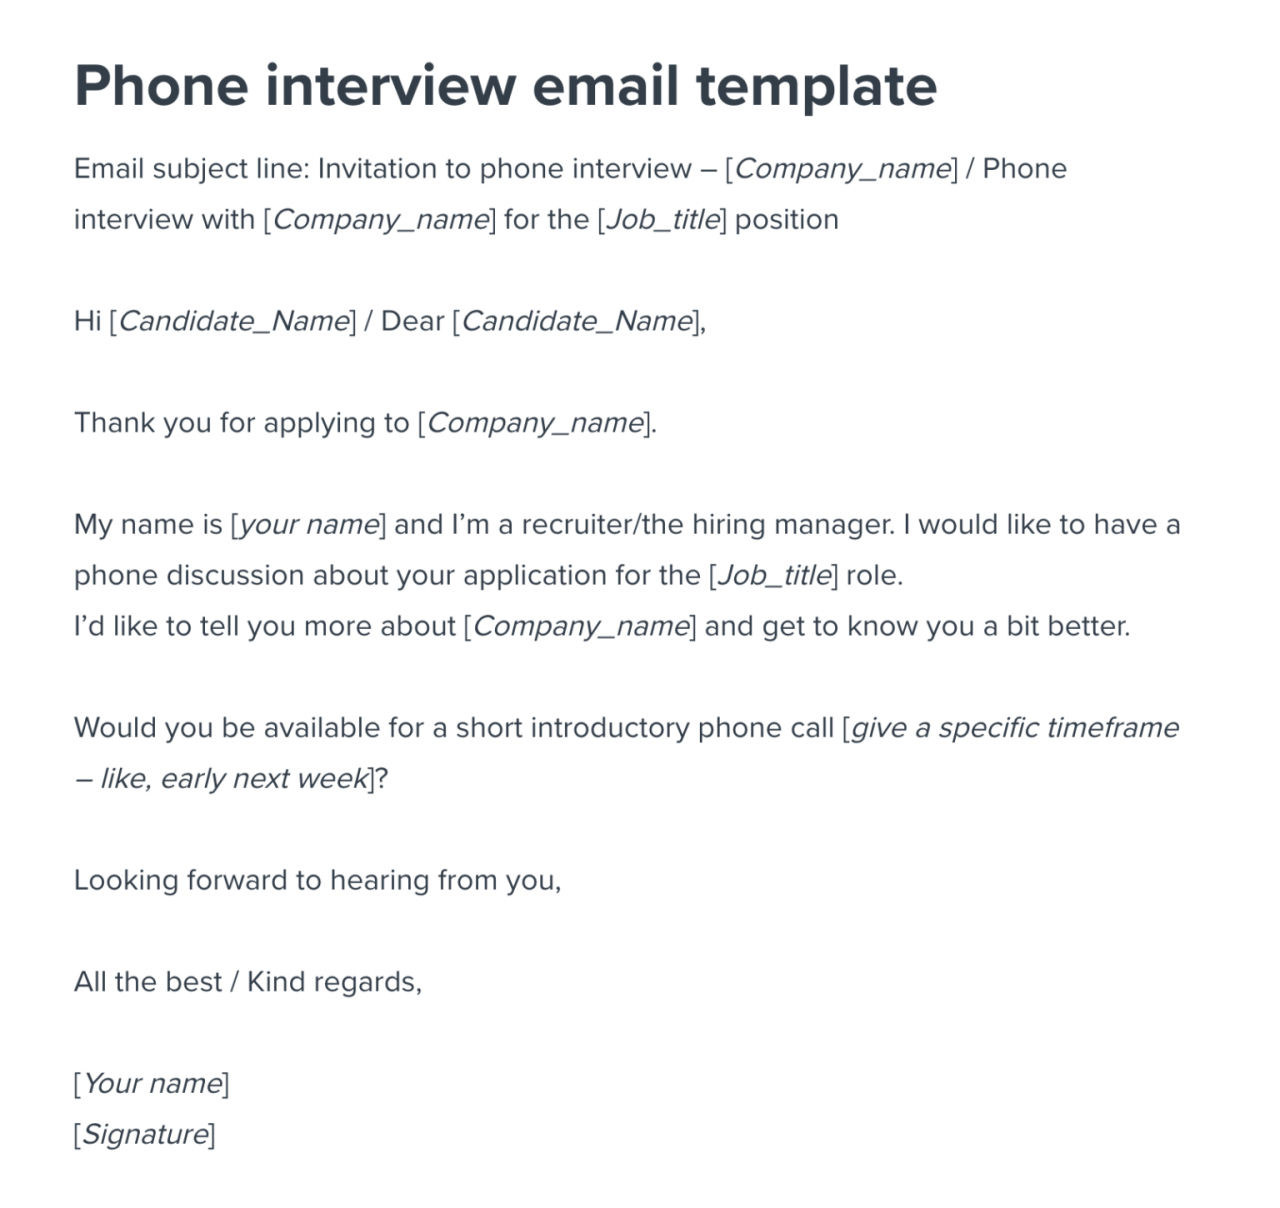 Arrange an interview email